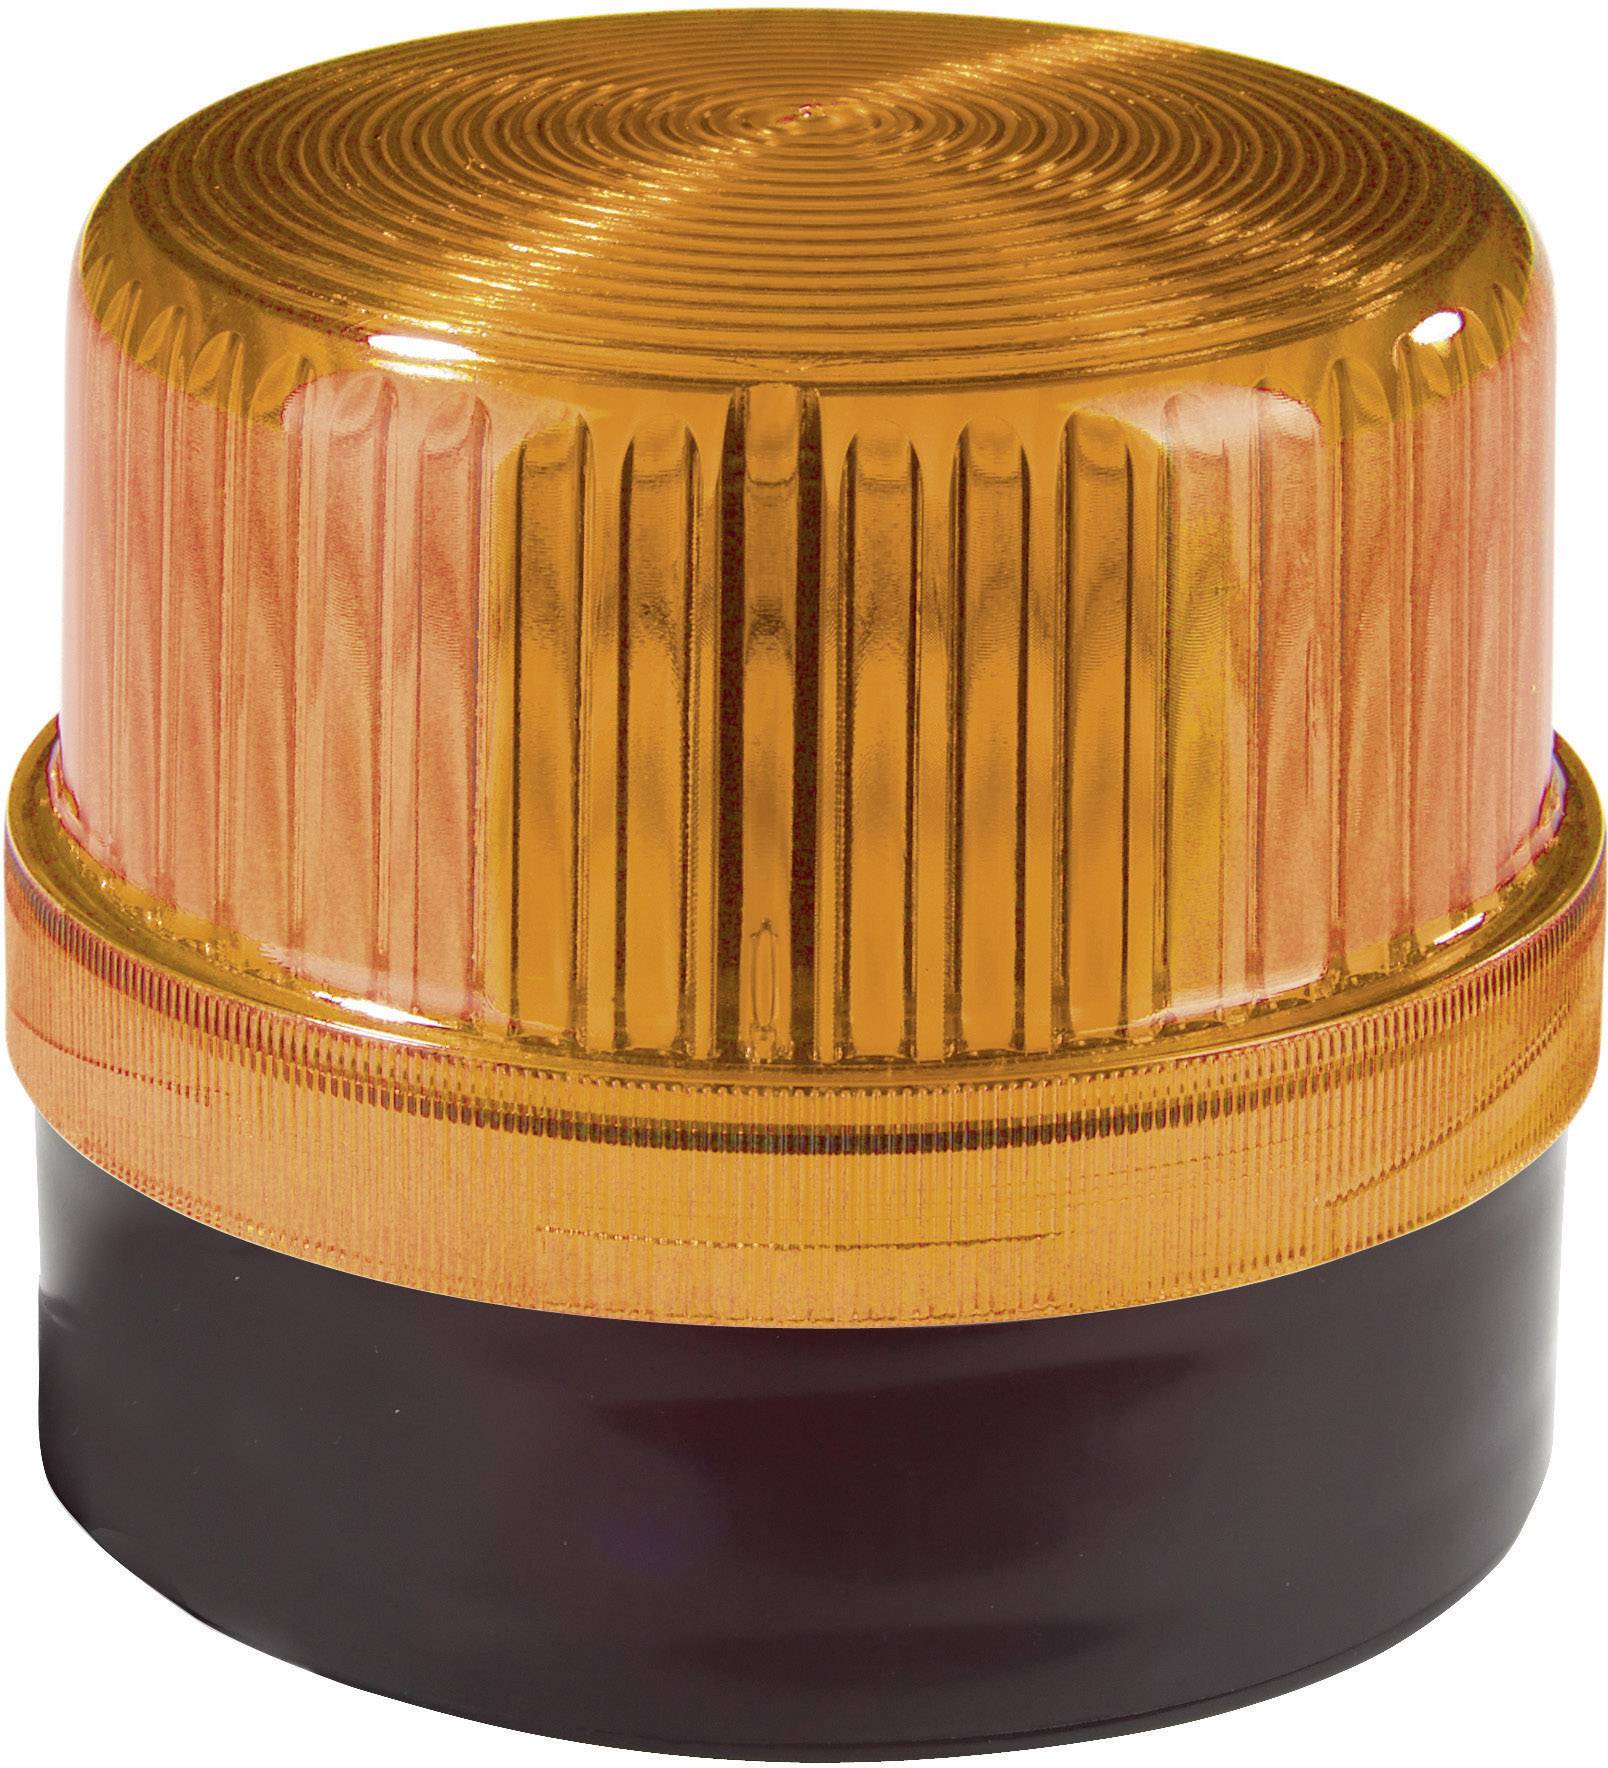 AUER SIGNAL Signalleuchte LED Auer Signalgeräte DLG Orange Orange Dauerlicht 24 V/DC, 24 V/AC